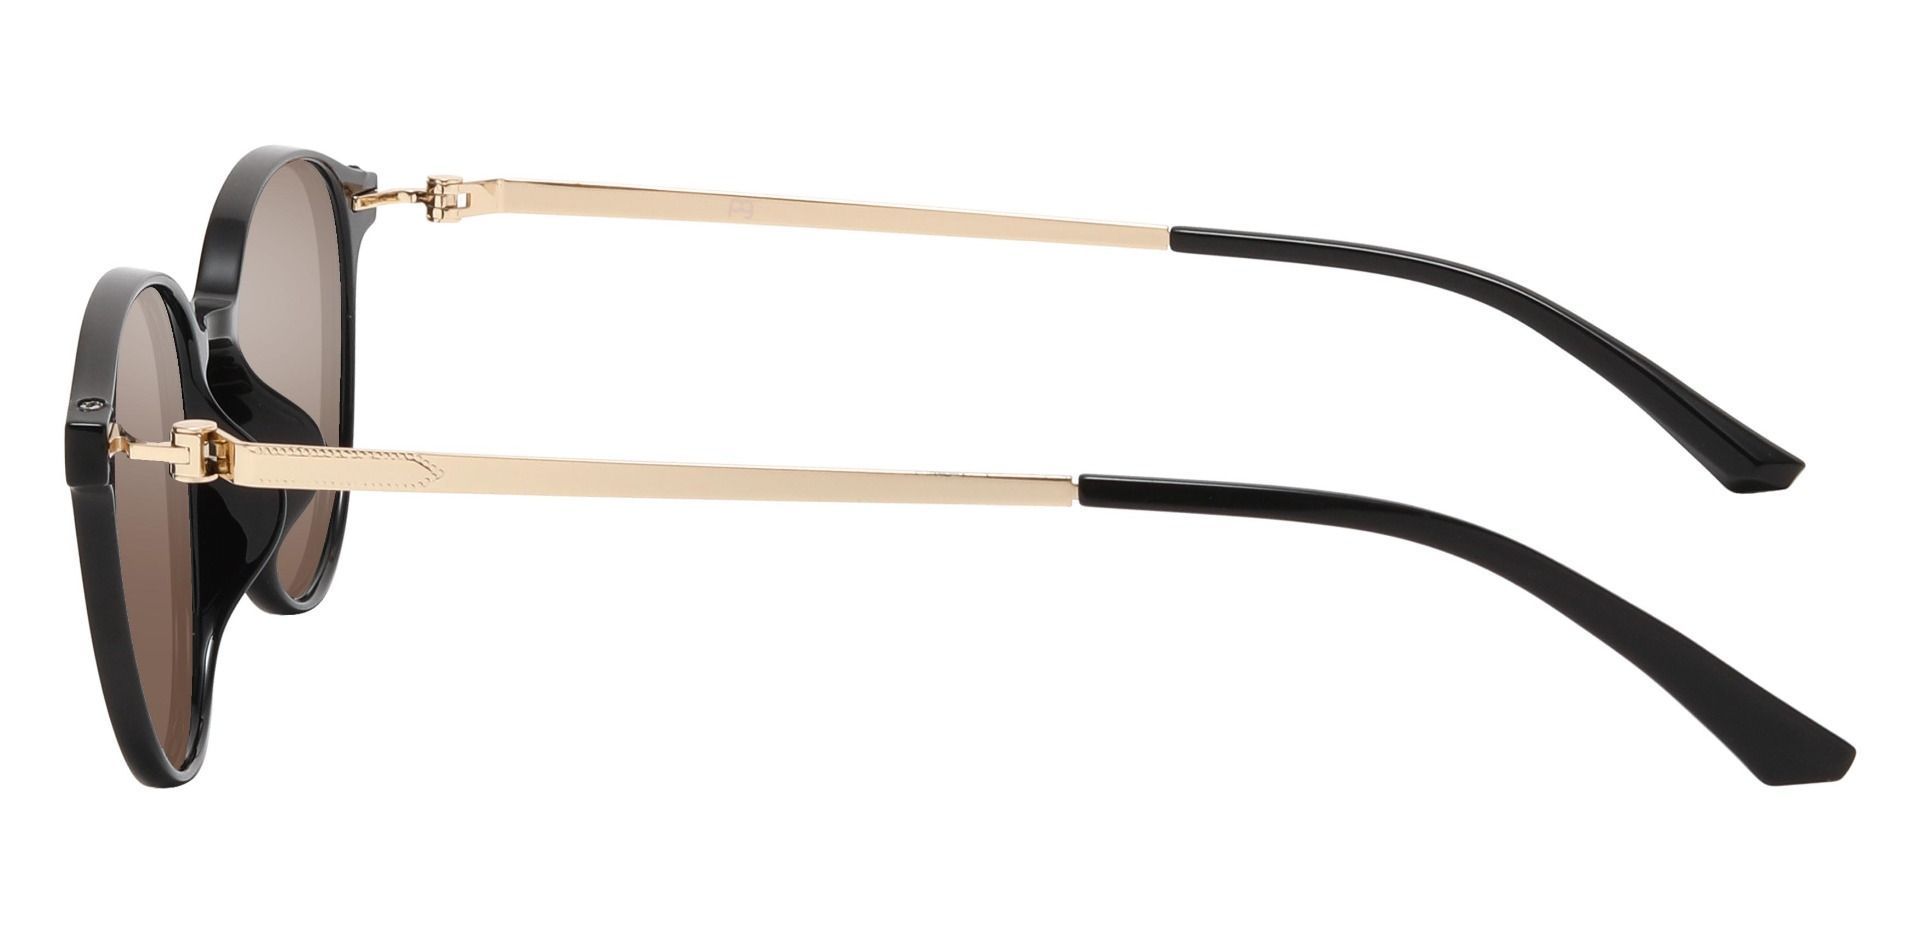 Springer Round Lined Bifocal Sunglasses - Black Frame With Brown Lenses